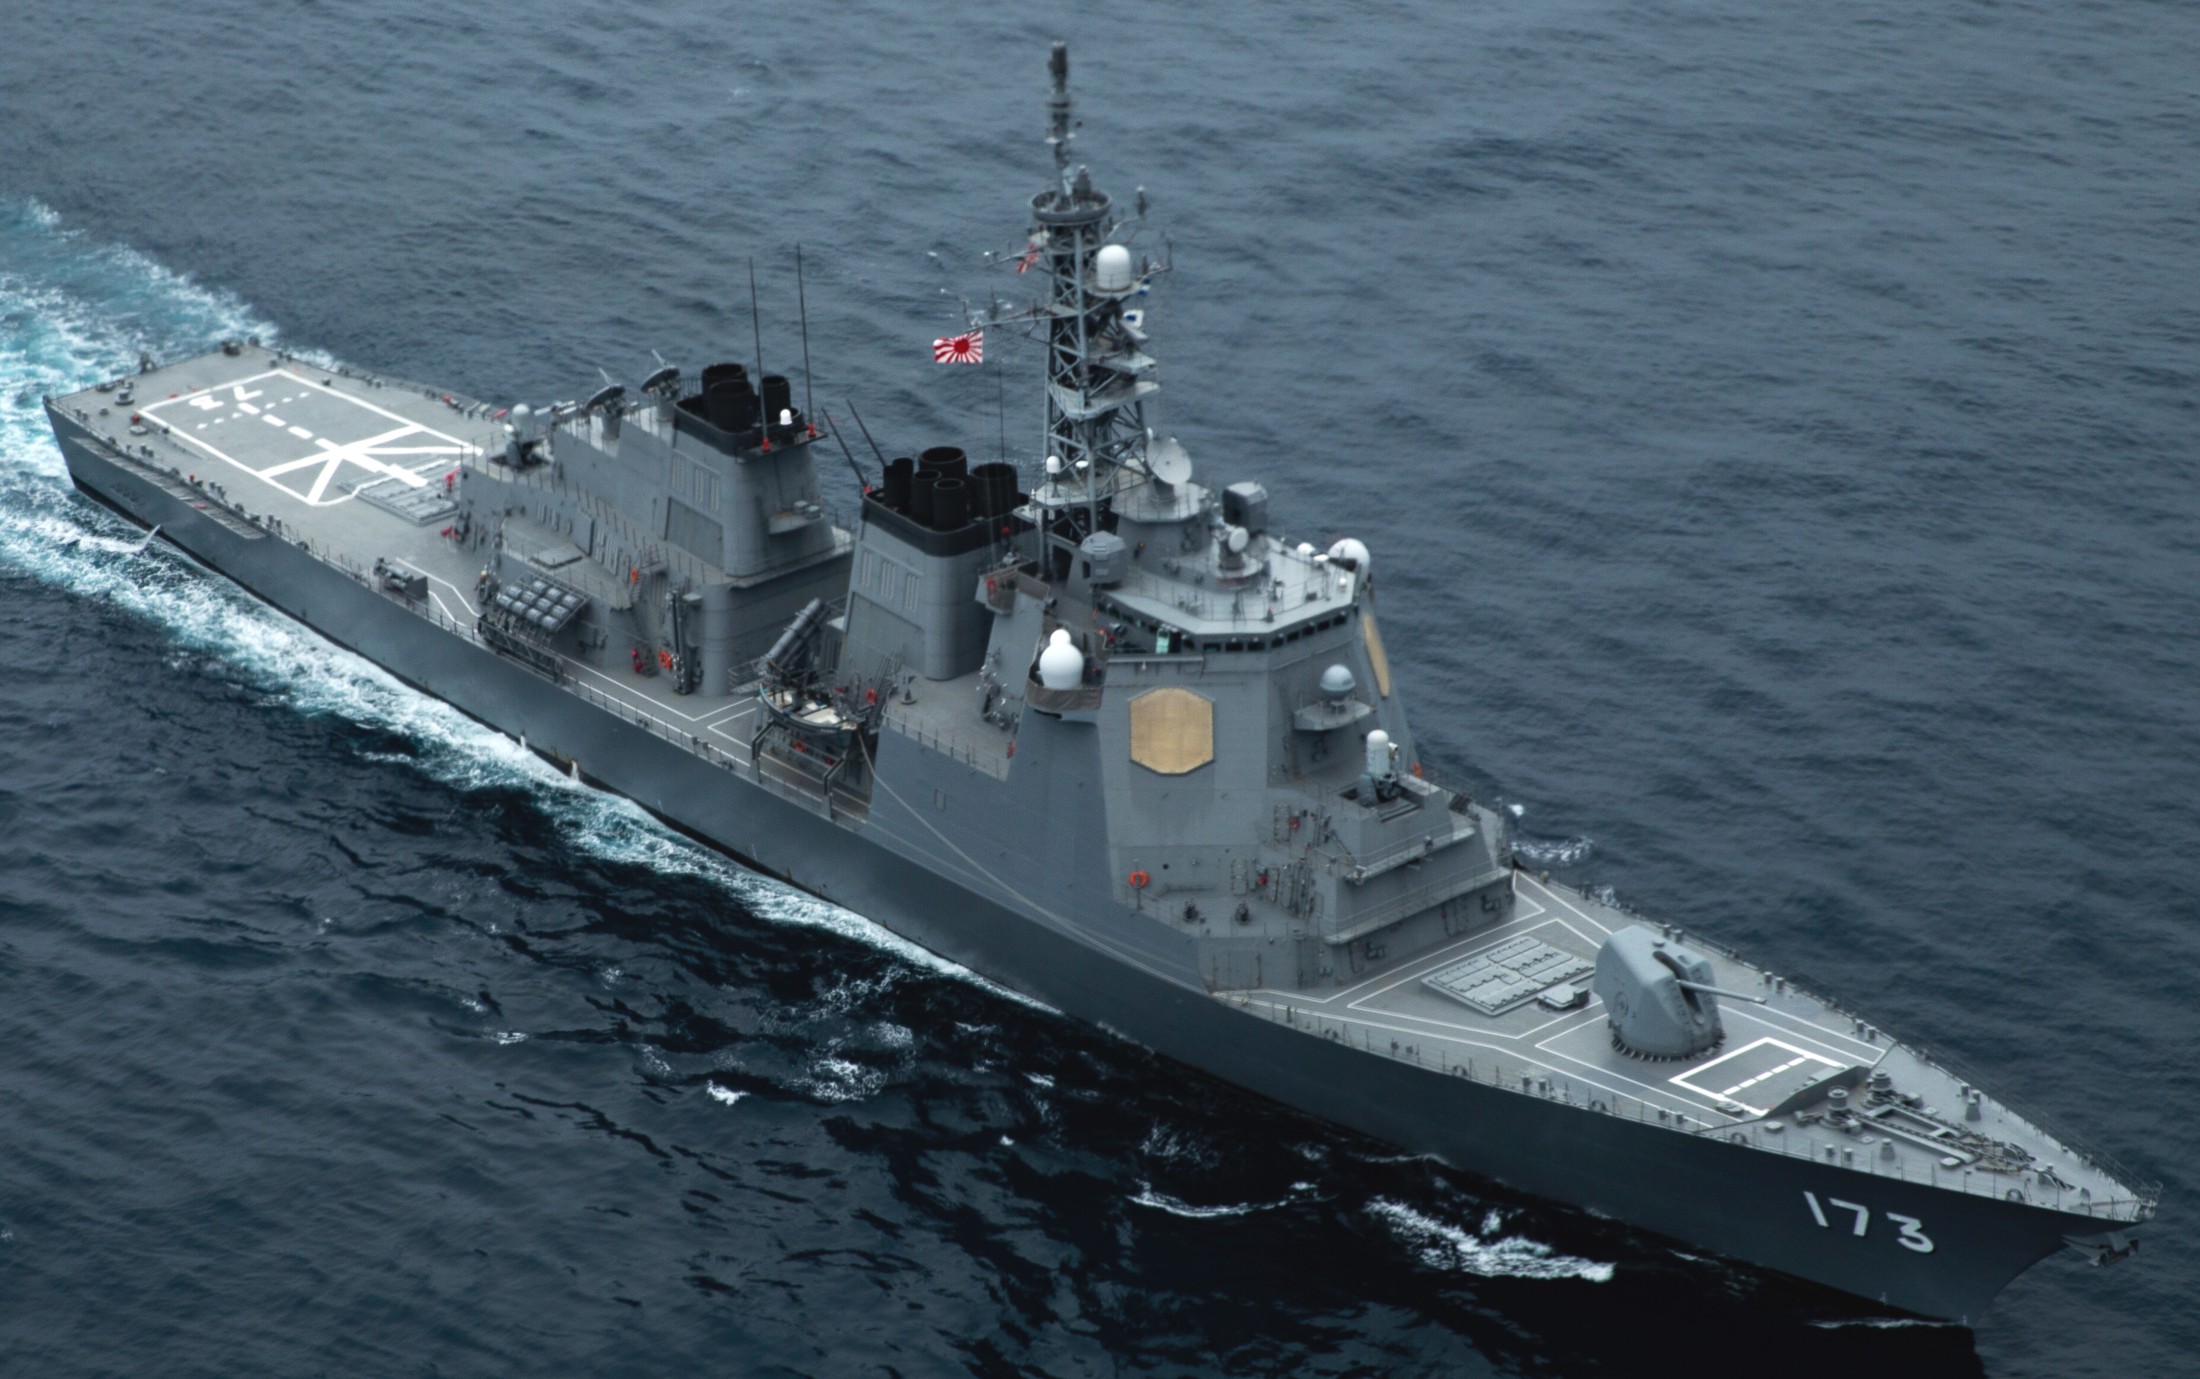 ddg-173 js kongo class guided missile destroyer aegis japan maritime self defense force jmsdf 26